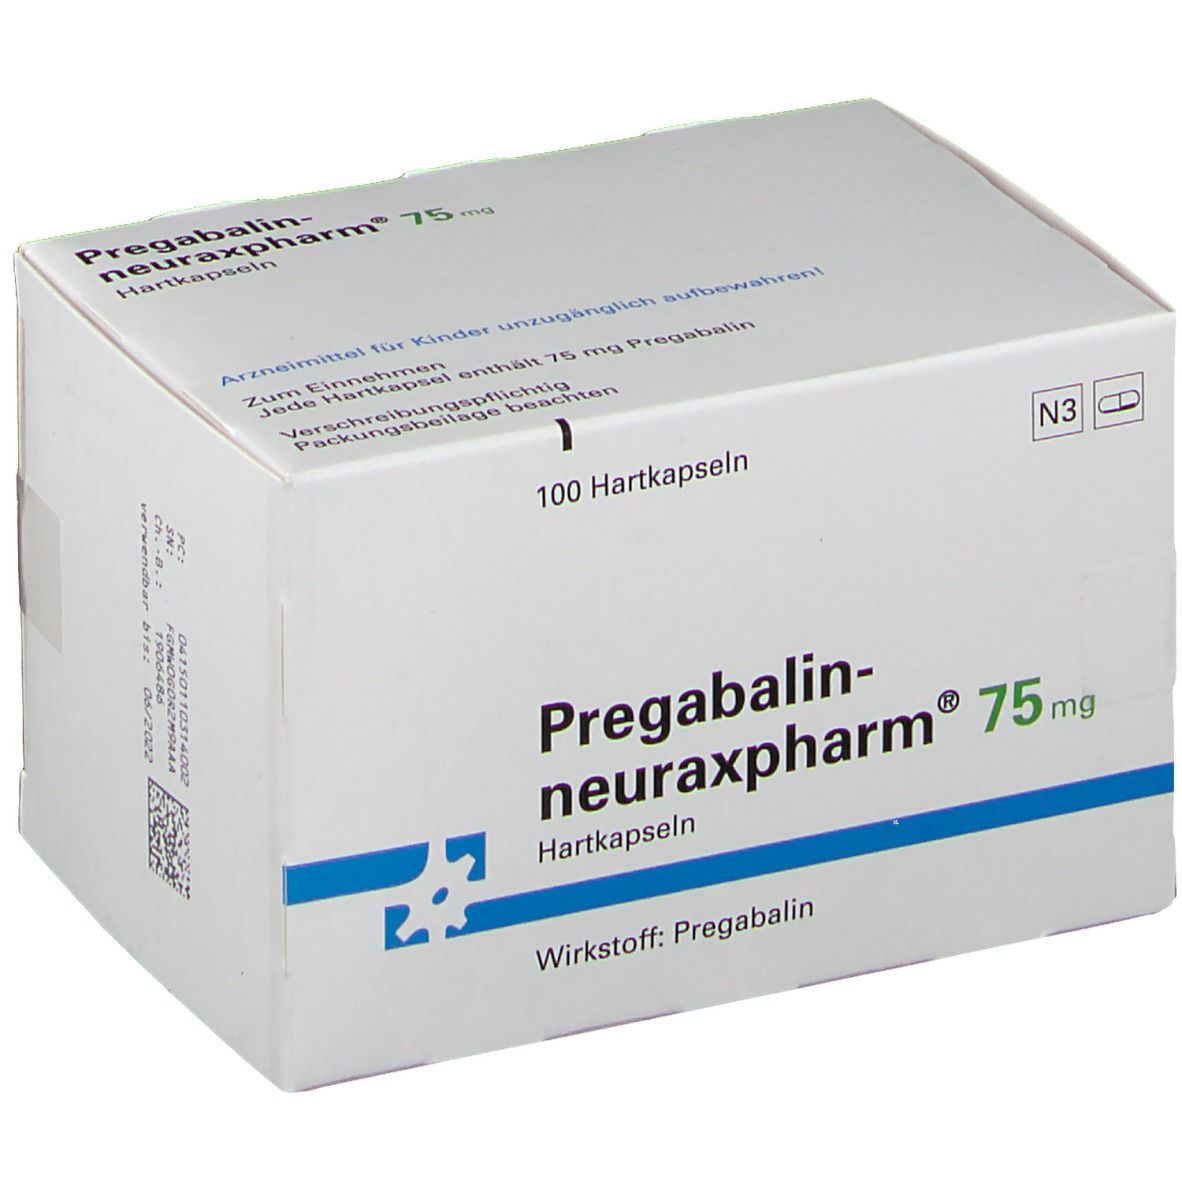 Pregabalin-neuraxpharm® 75 mg